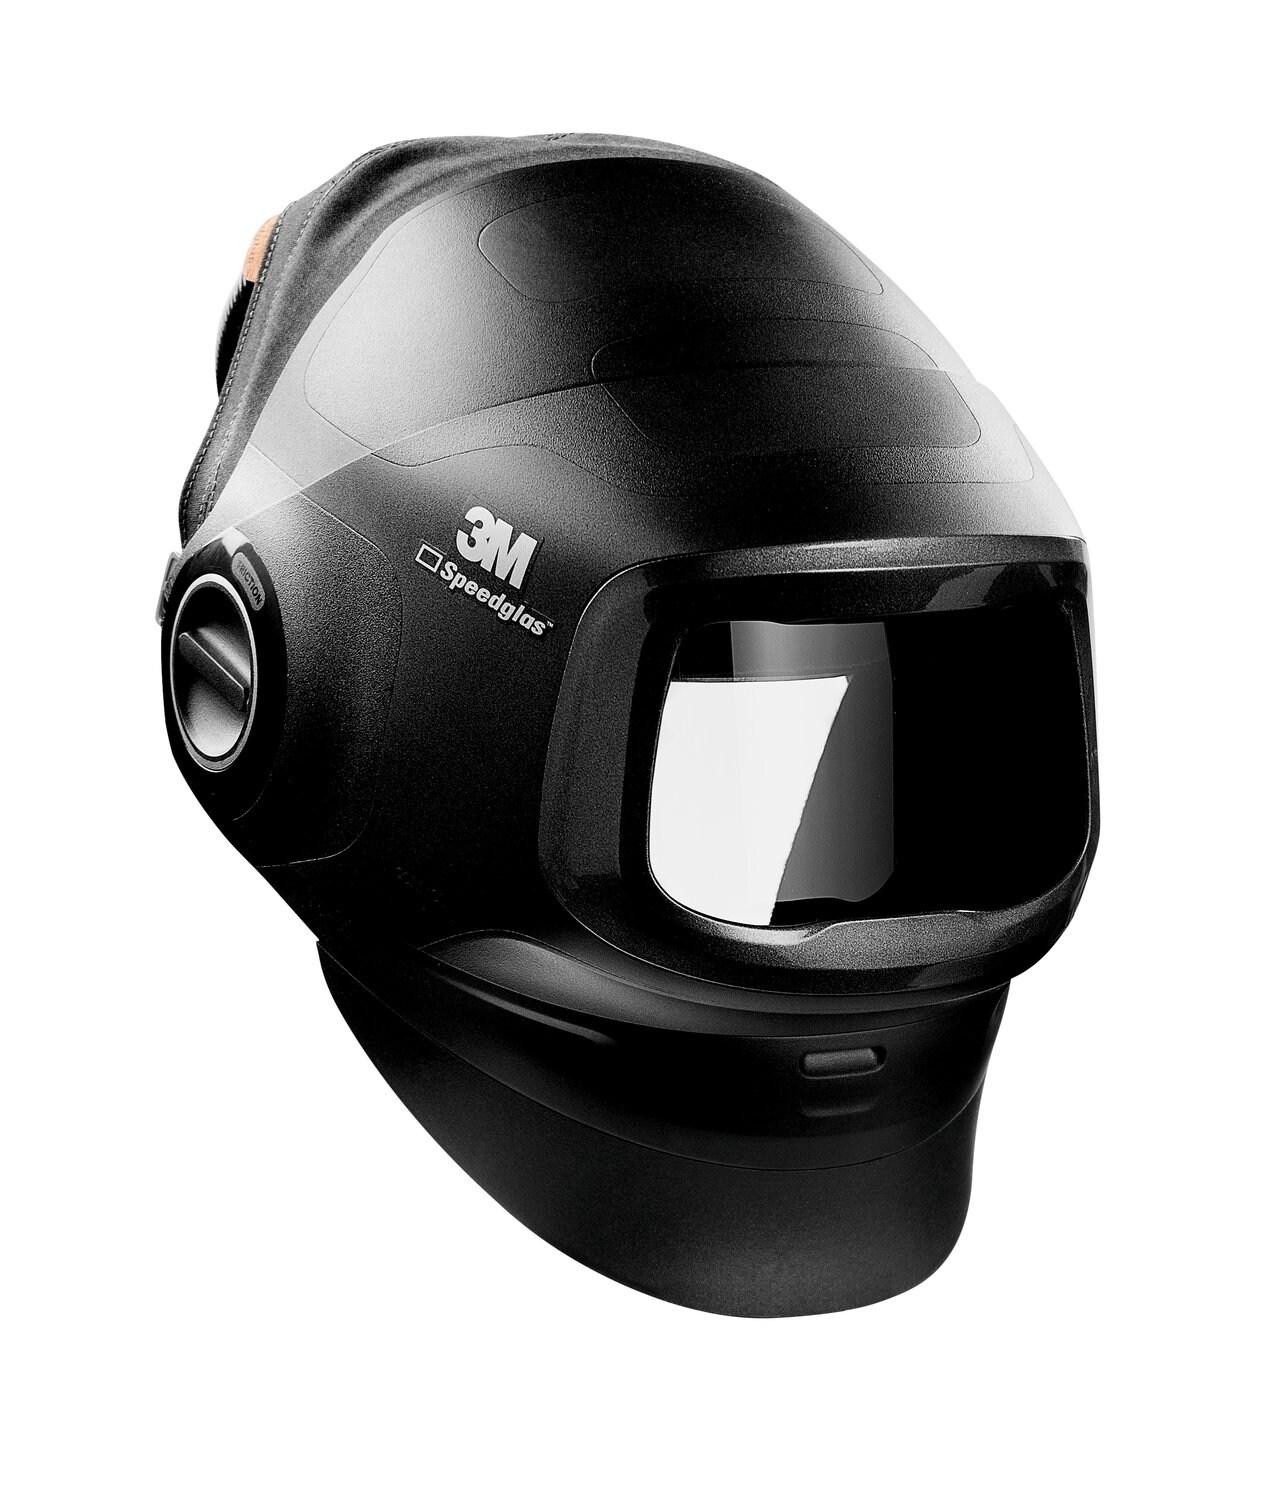 7100259574 - 3M Speedglas Heavy-Duty Welding Helmet G5-01, Rigid Neck Cover, Fabric Head Cover, No ADF, 46-0099-35, 1 EA/Case